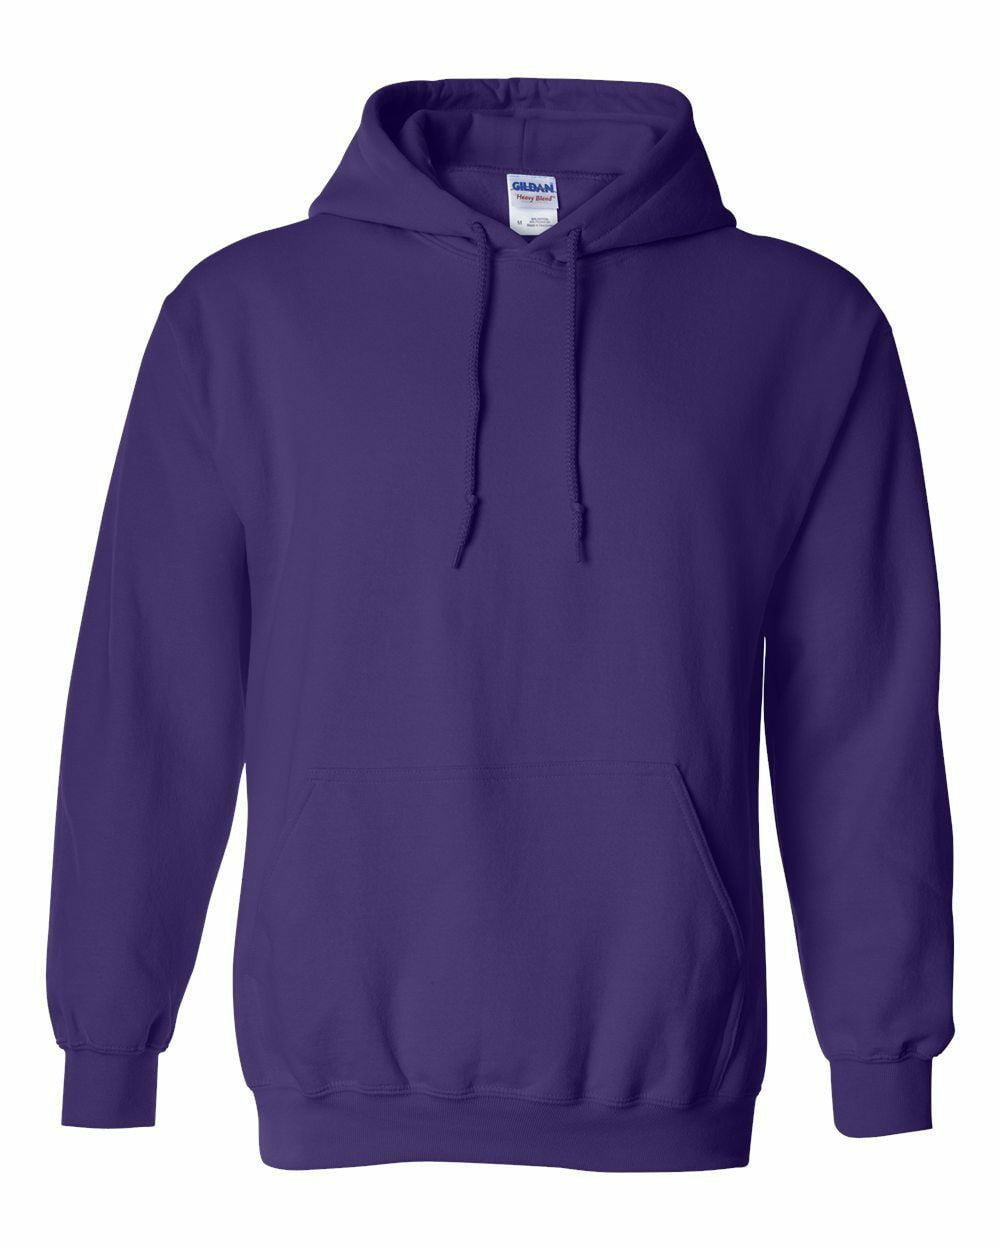 Pullover Purple Plain Hoodie Fashion Long Sleeve Sweatshirt Active Unisex